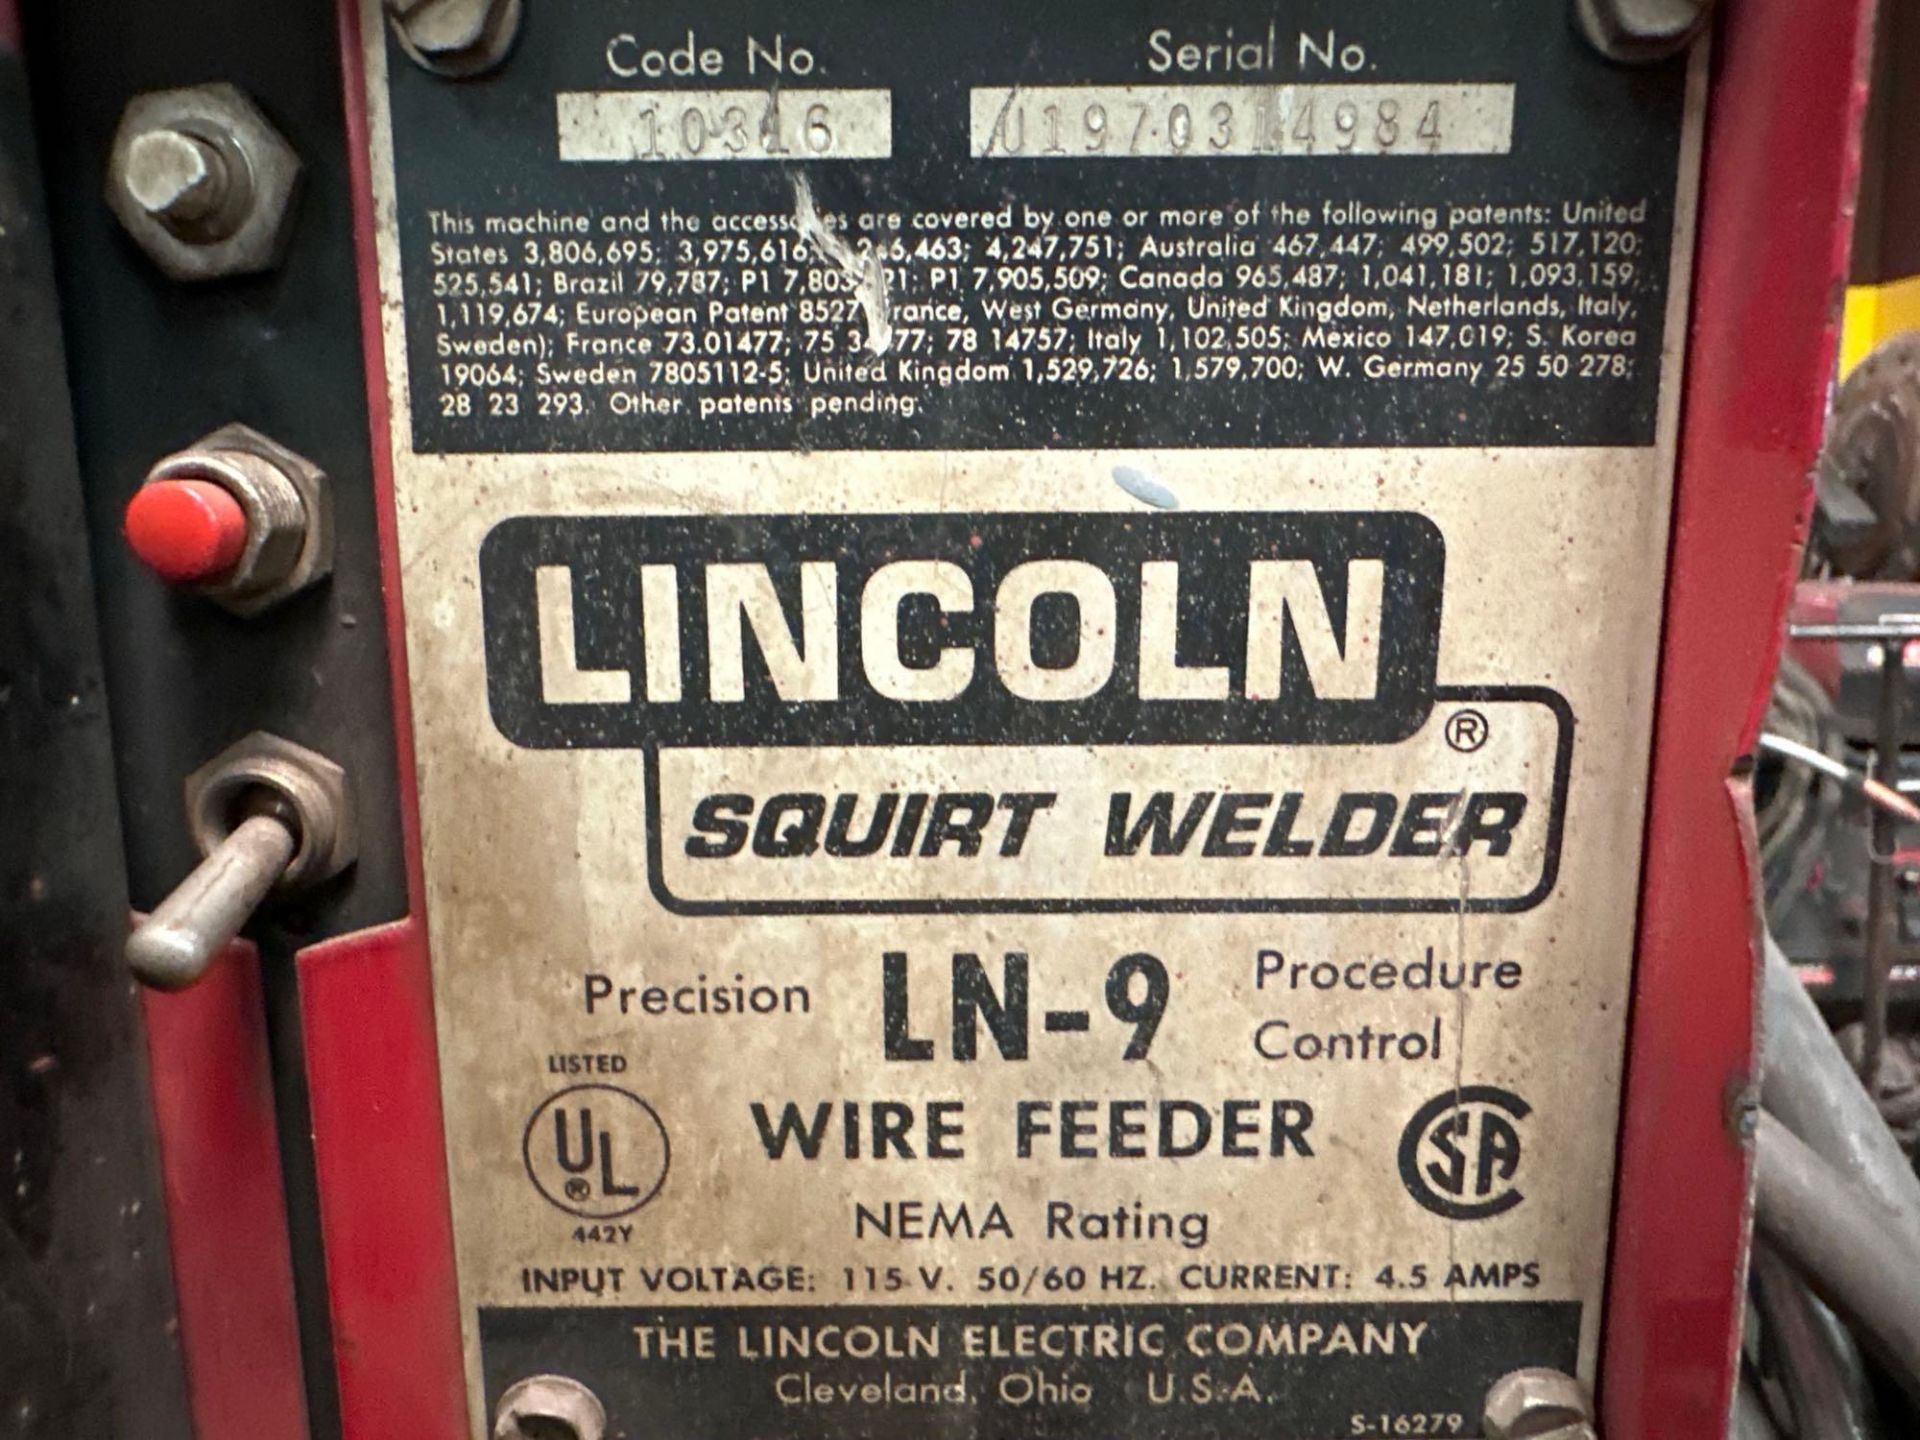 Lincoln Flextec 650 Welder s/n U1150109185, w/ LincolnLN-9 Wire Feeder, s/n U1970314984, Welding - Image 10 of 13